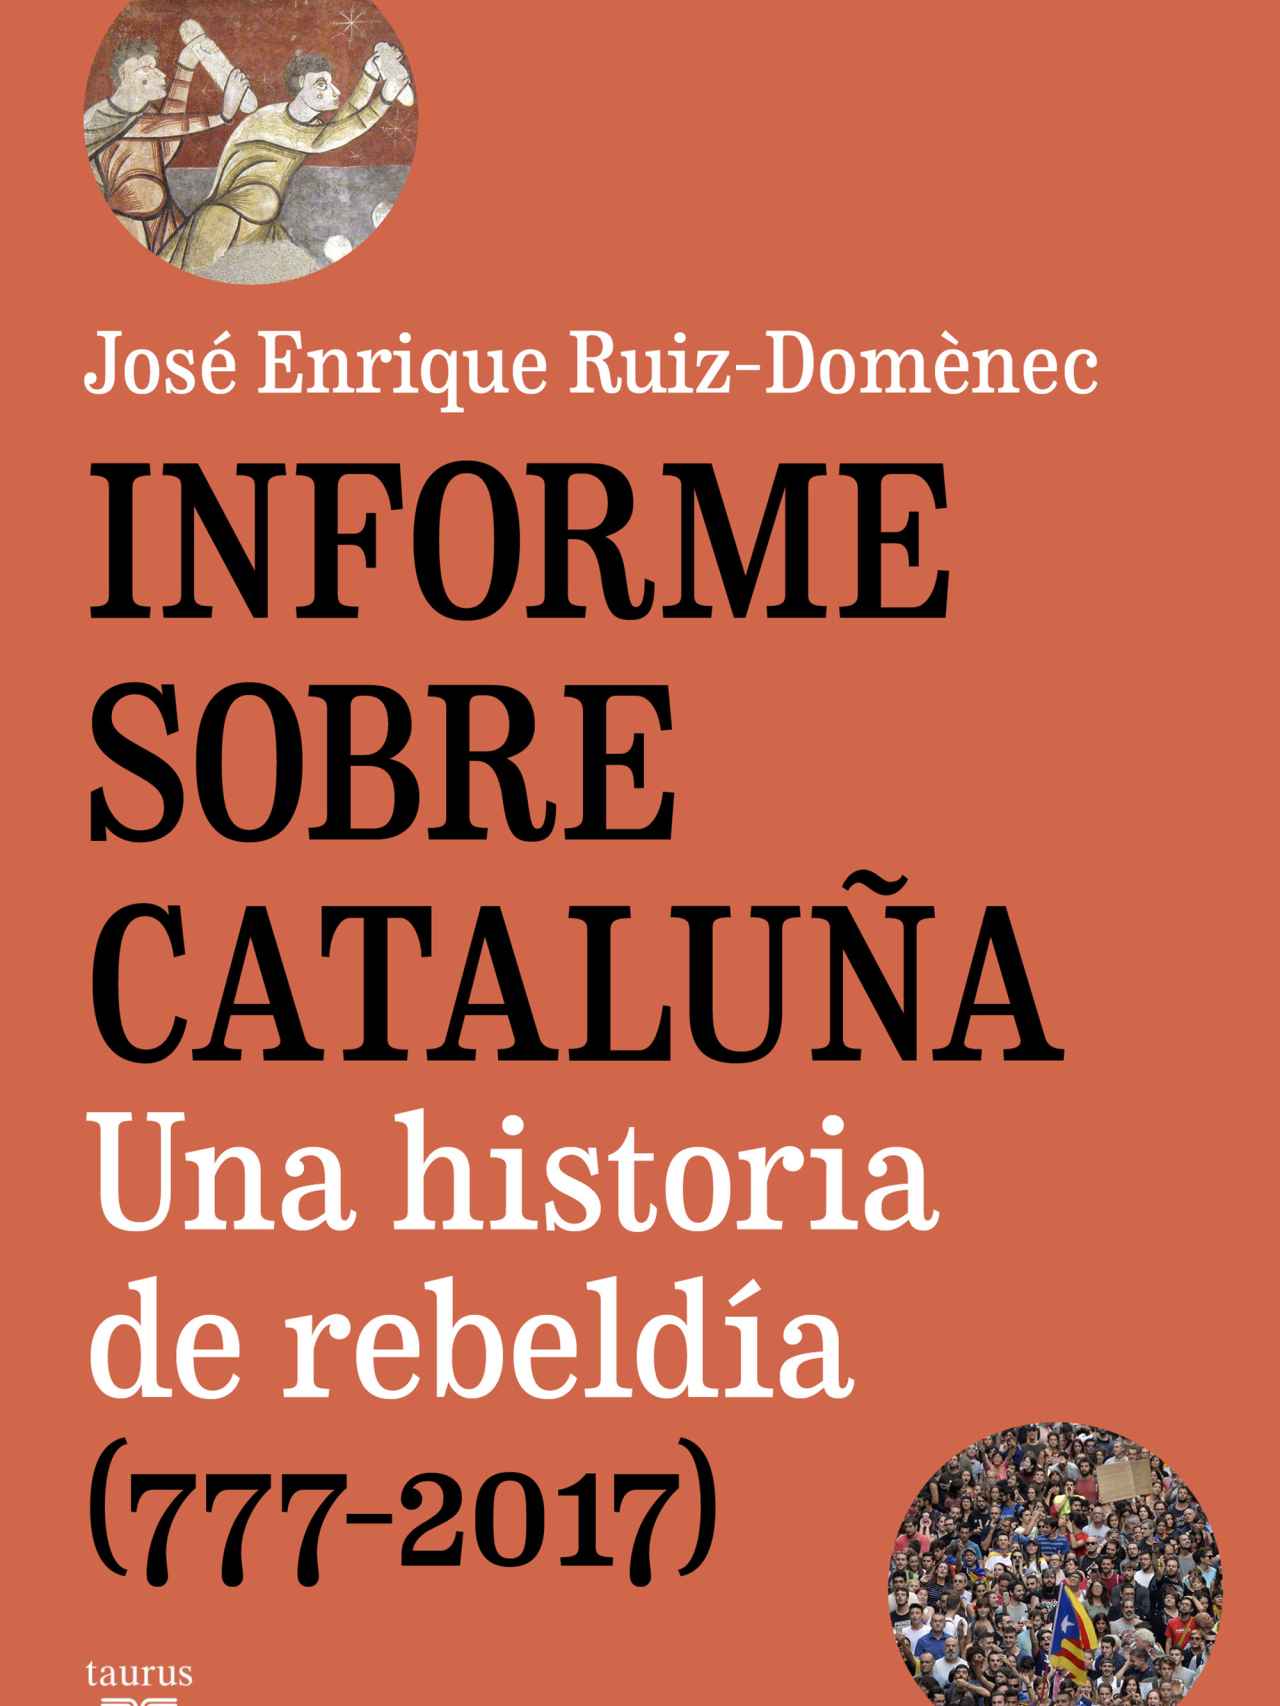 Portada de 'Informe sobre Cataluña'.